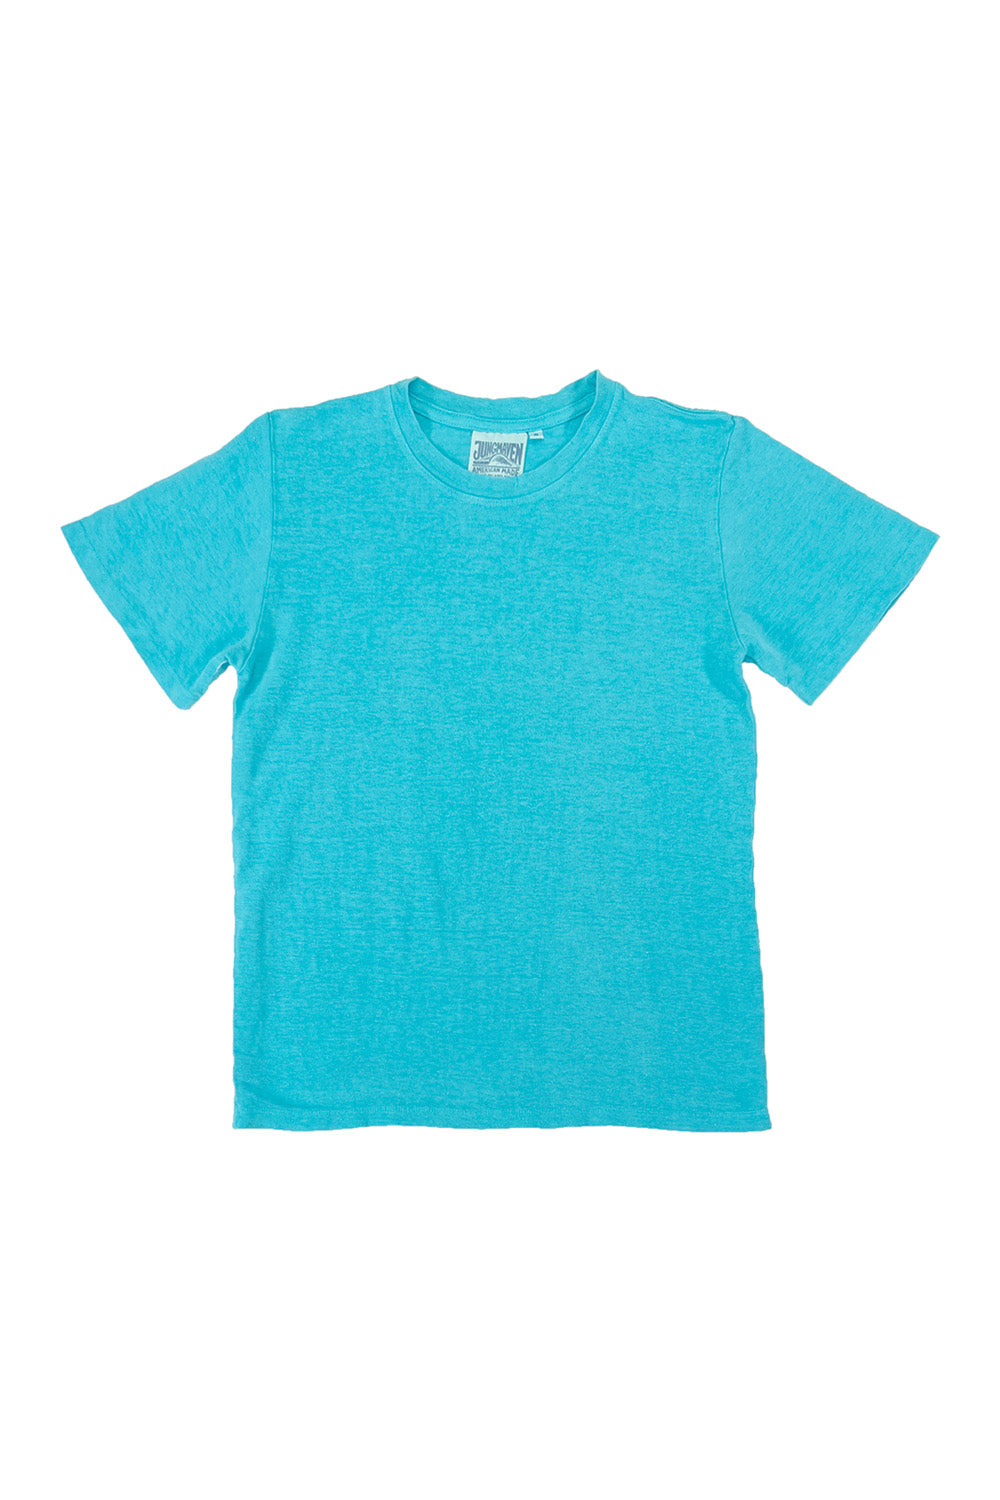 Mana 10 - 100% Hemp Tee | Jungmaven Hemp Clothing & Accessories / Color: Caribbean Blue